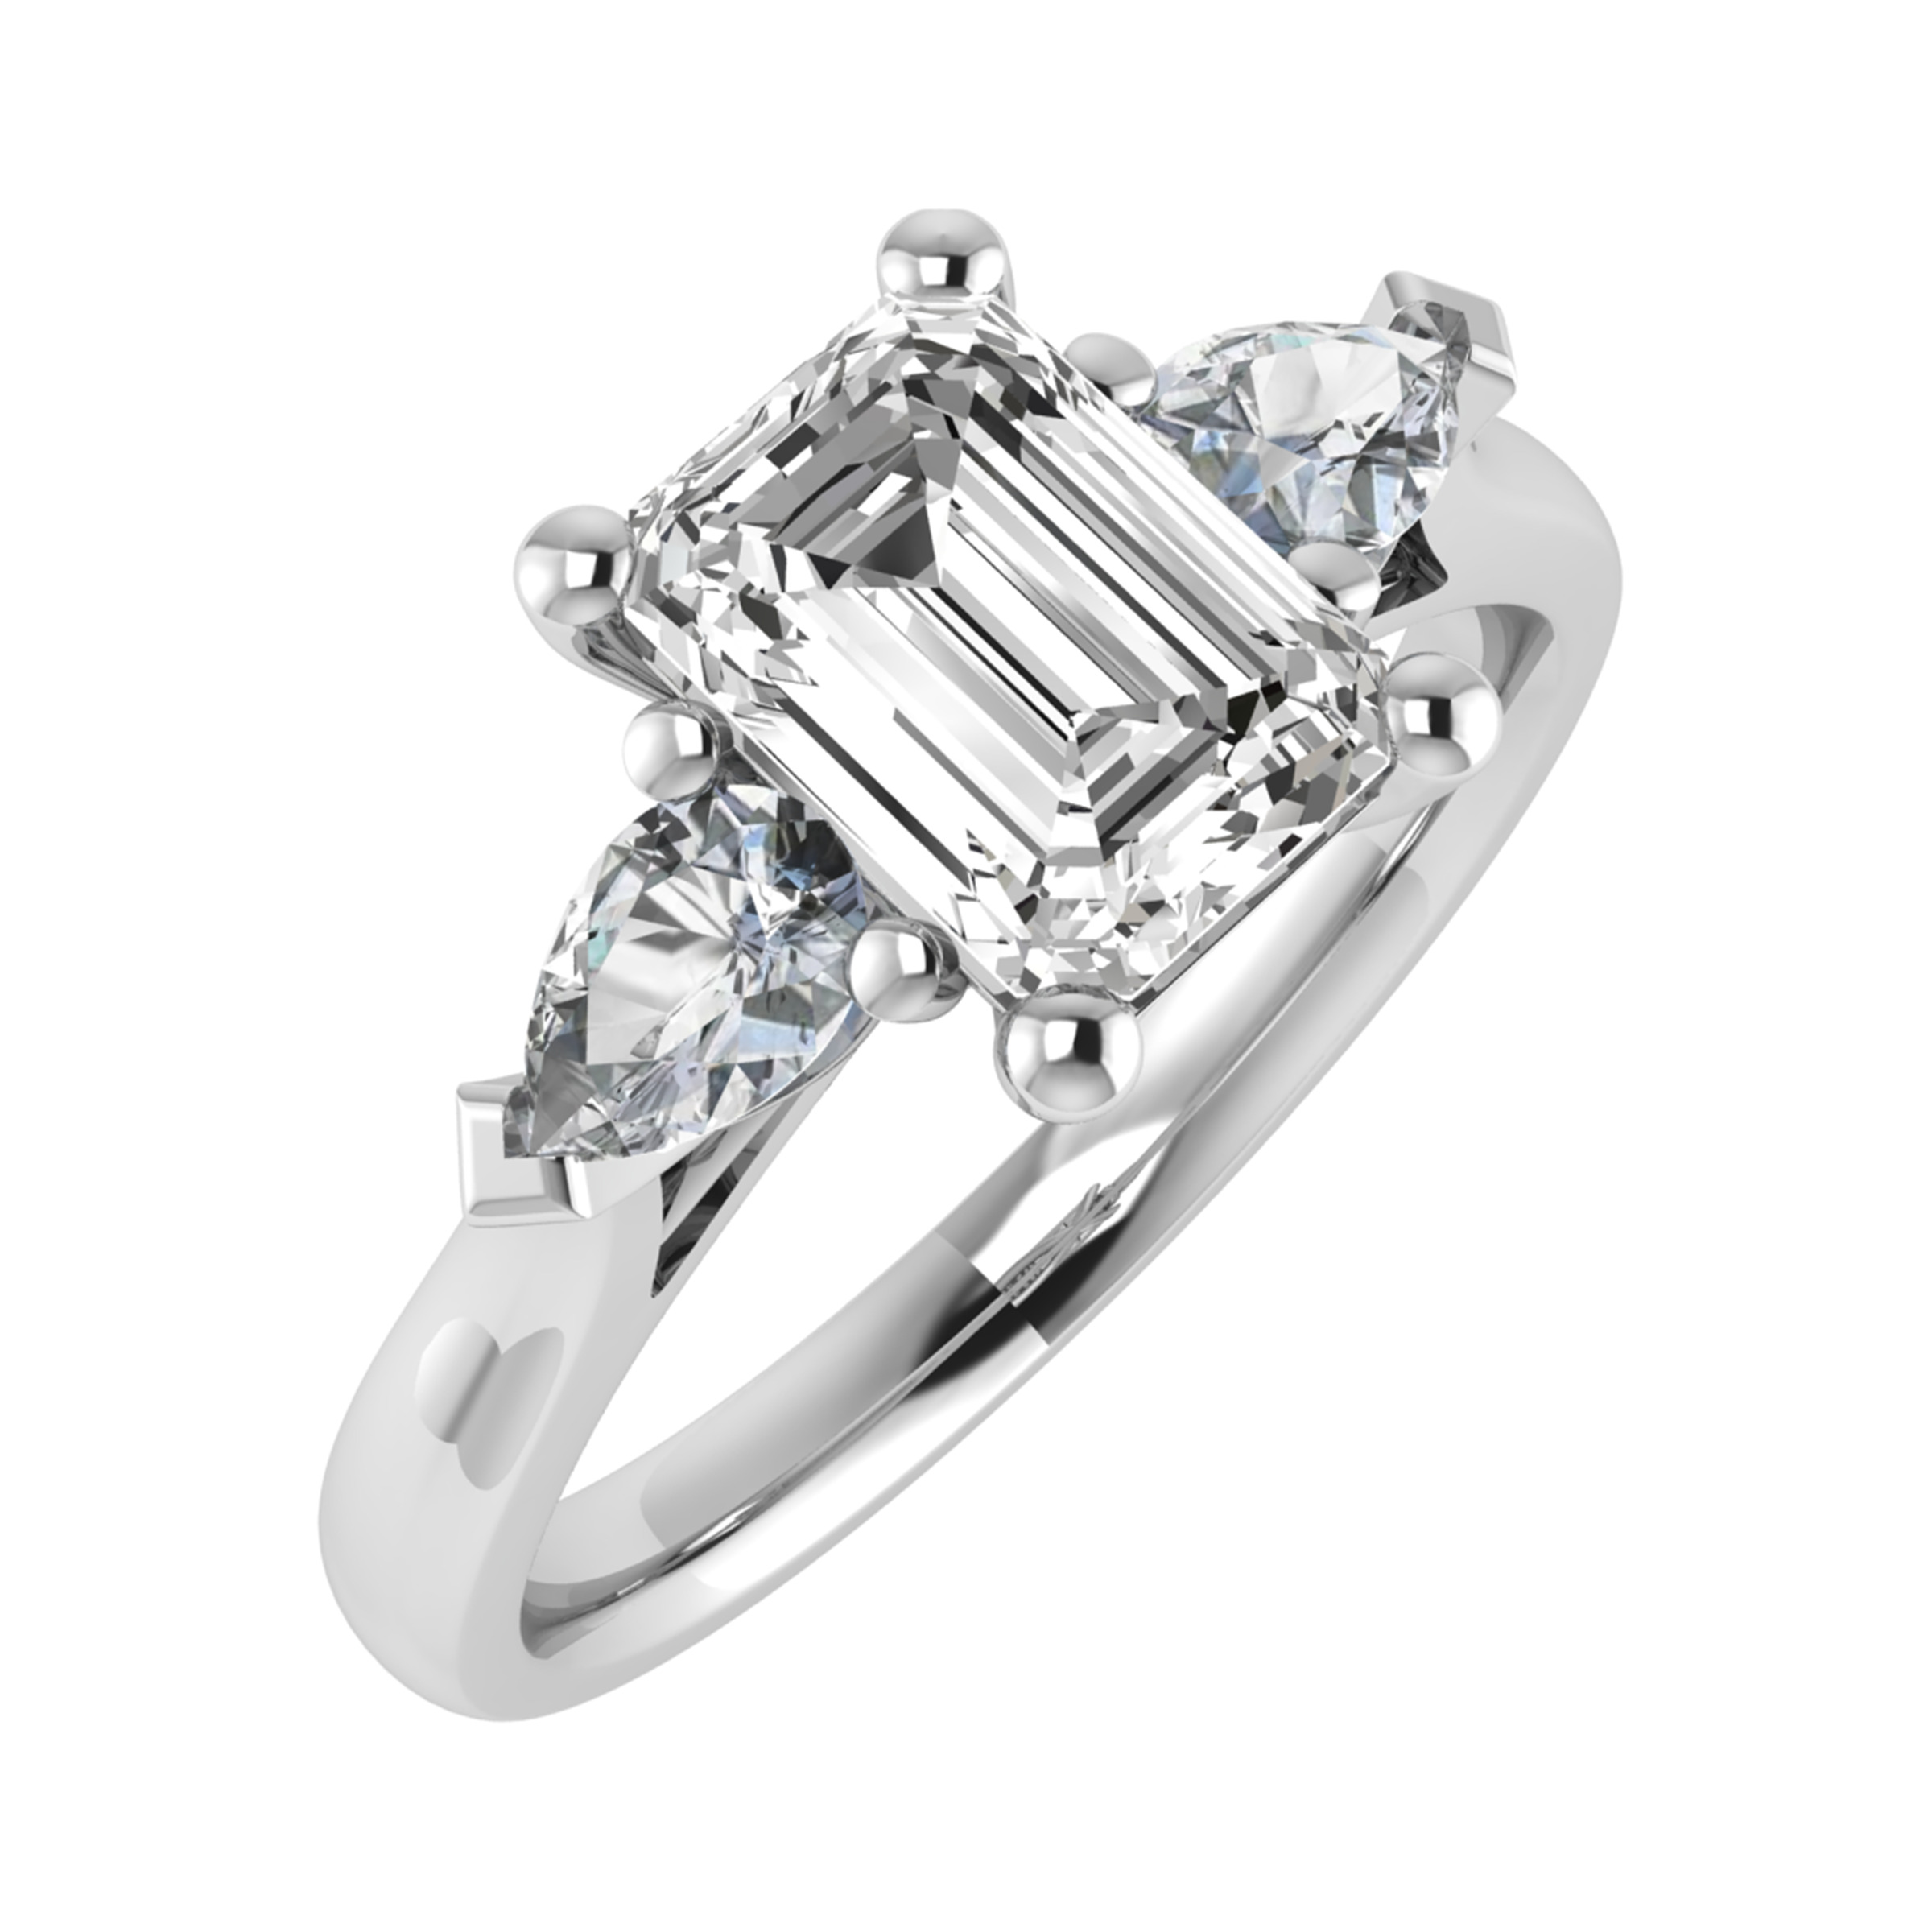 0.25 - 2.50 Carat Natural Diamond Trilogy Engagement Rings